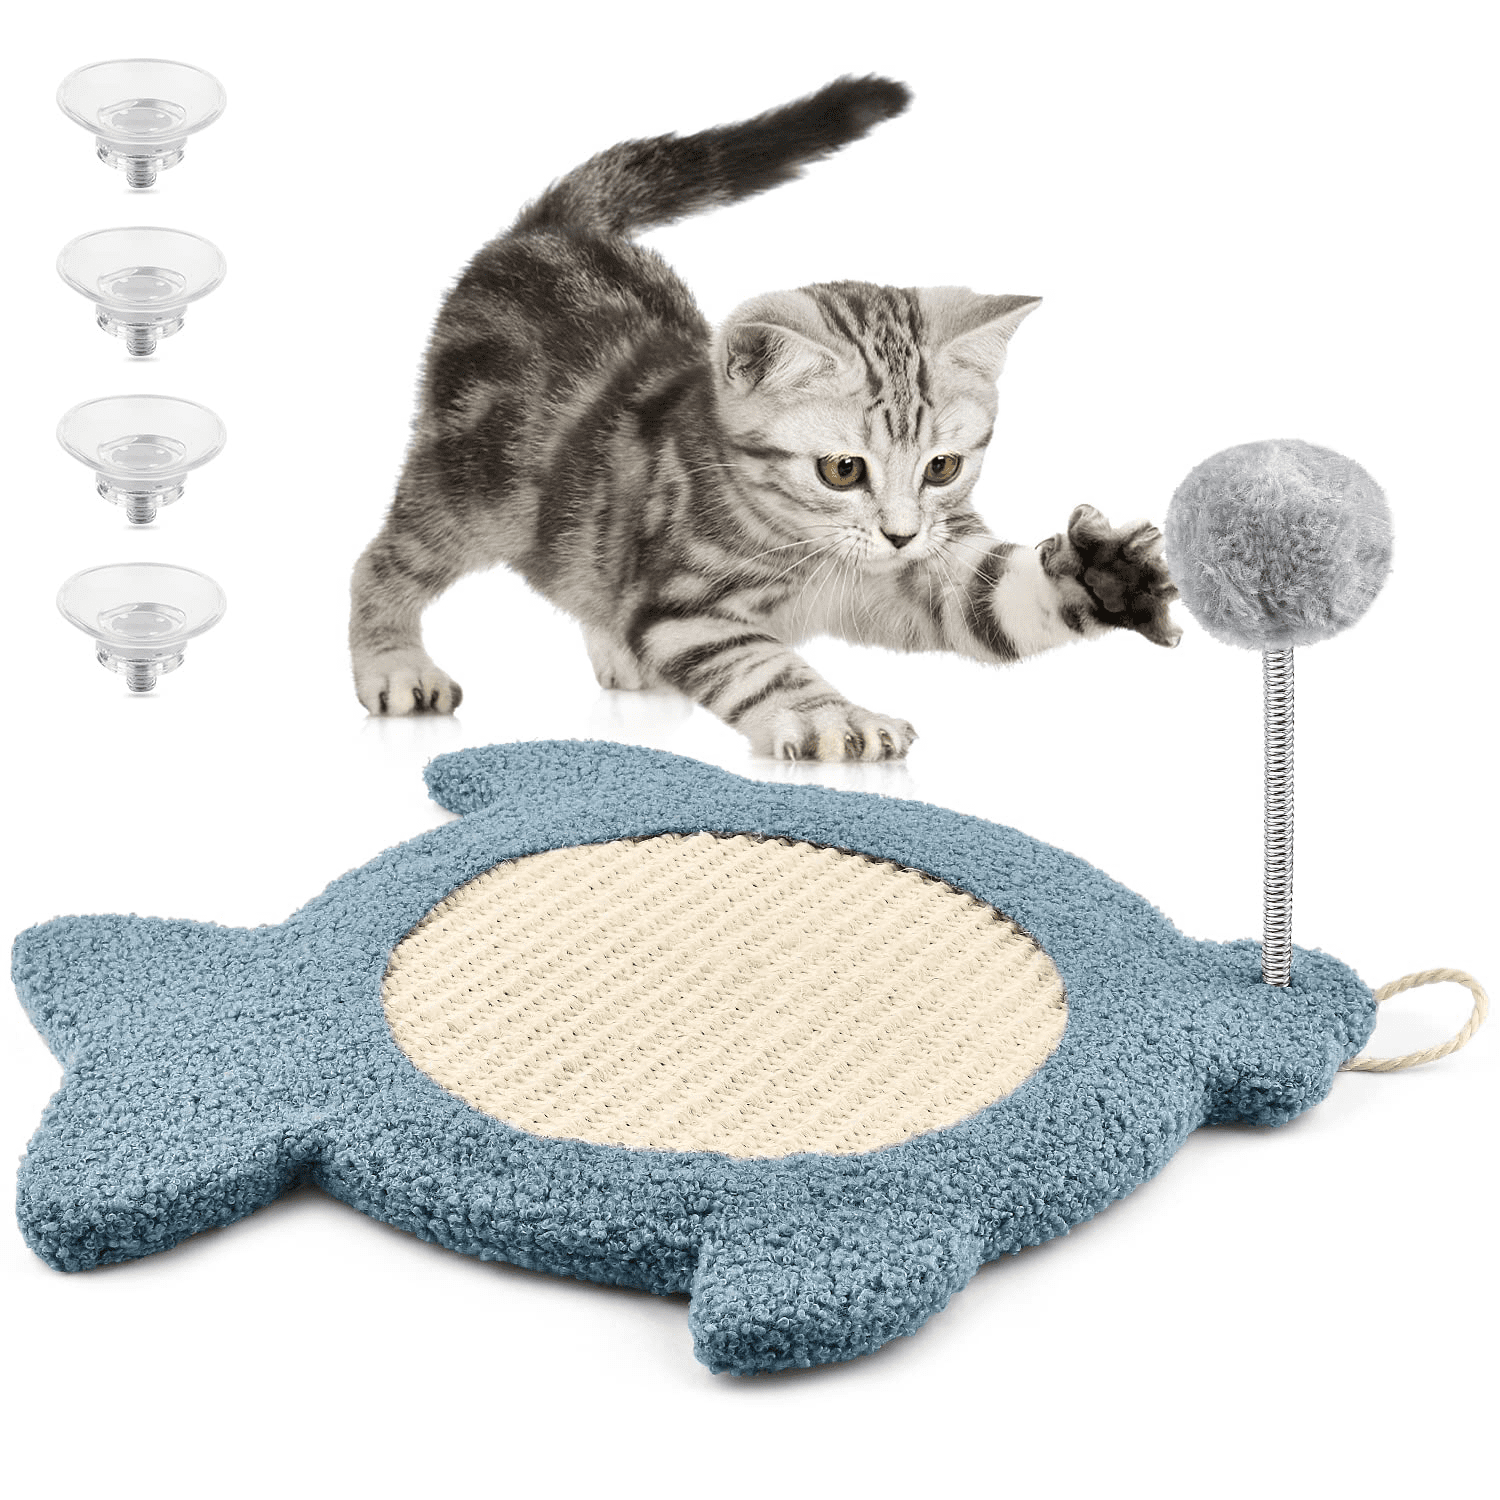 Corrugate Cardboard Surface Cat Toy with Catni... Uniinu Cat Scratcher Dumbbell 